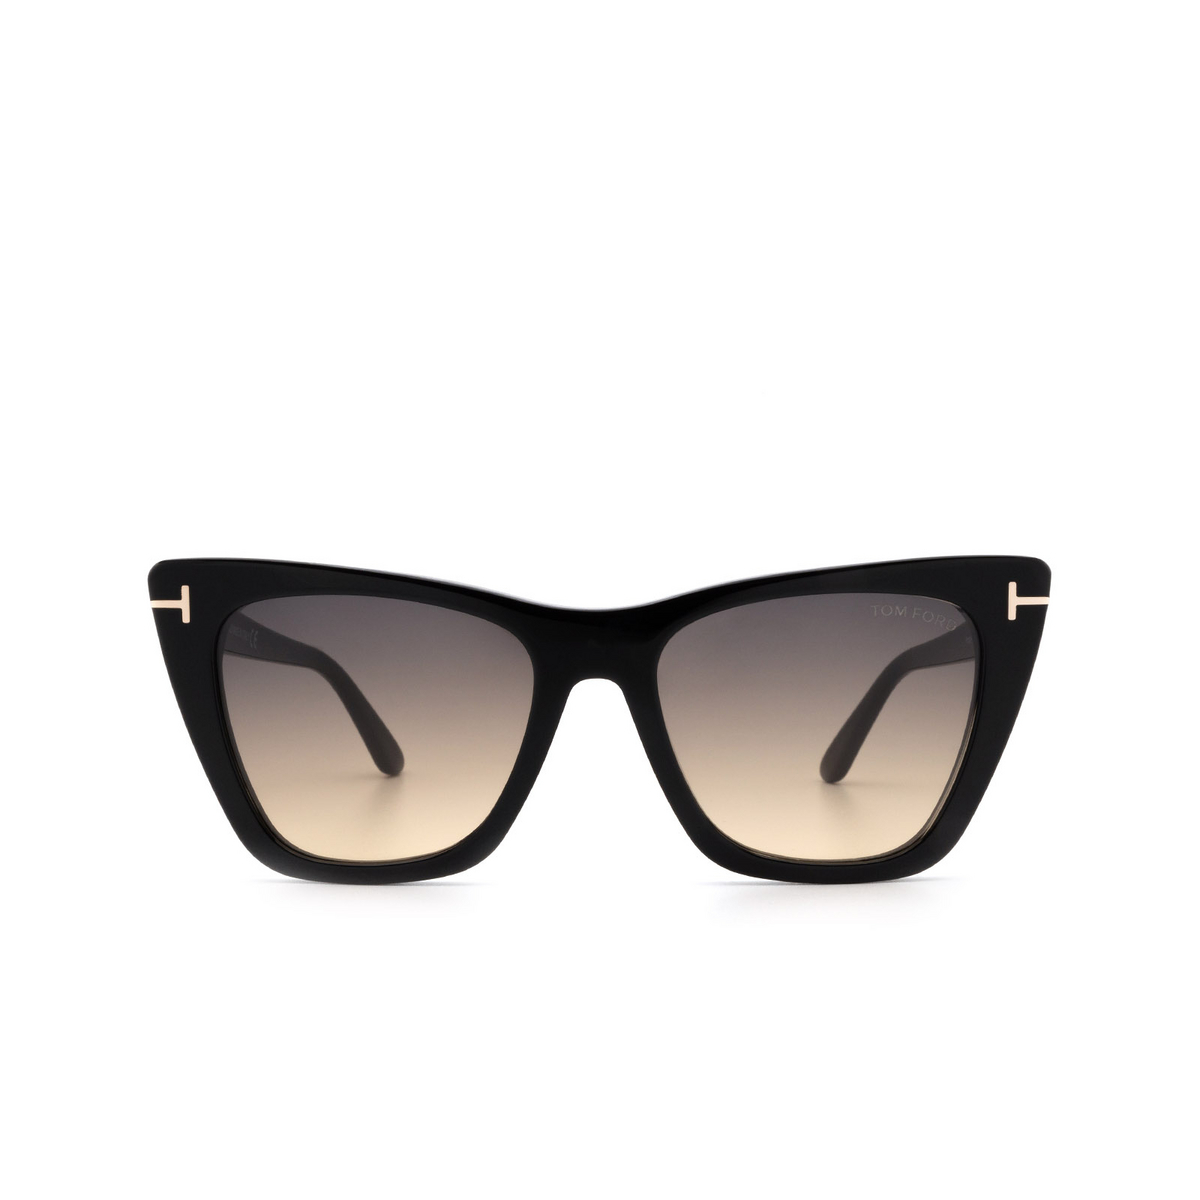 Tom Ford POPPY-02 Sunglasses 01B Shiny Black - front view